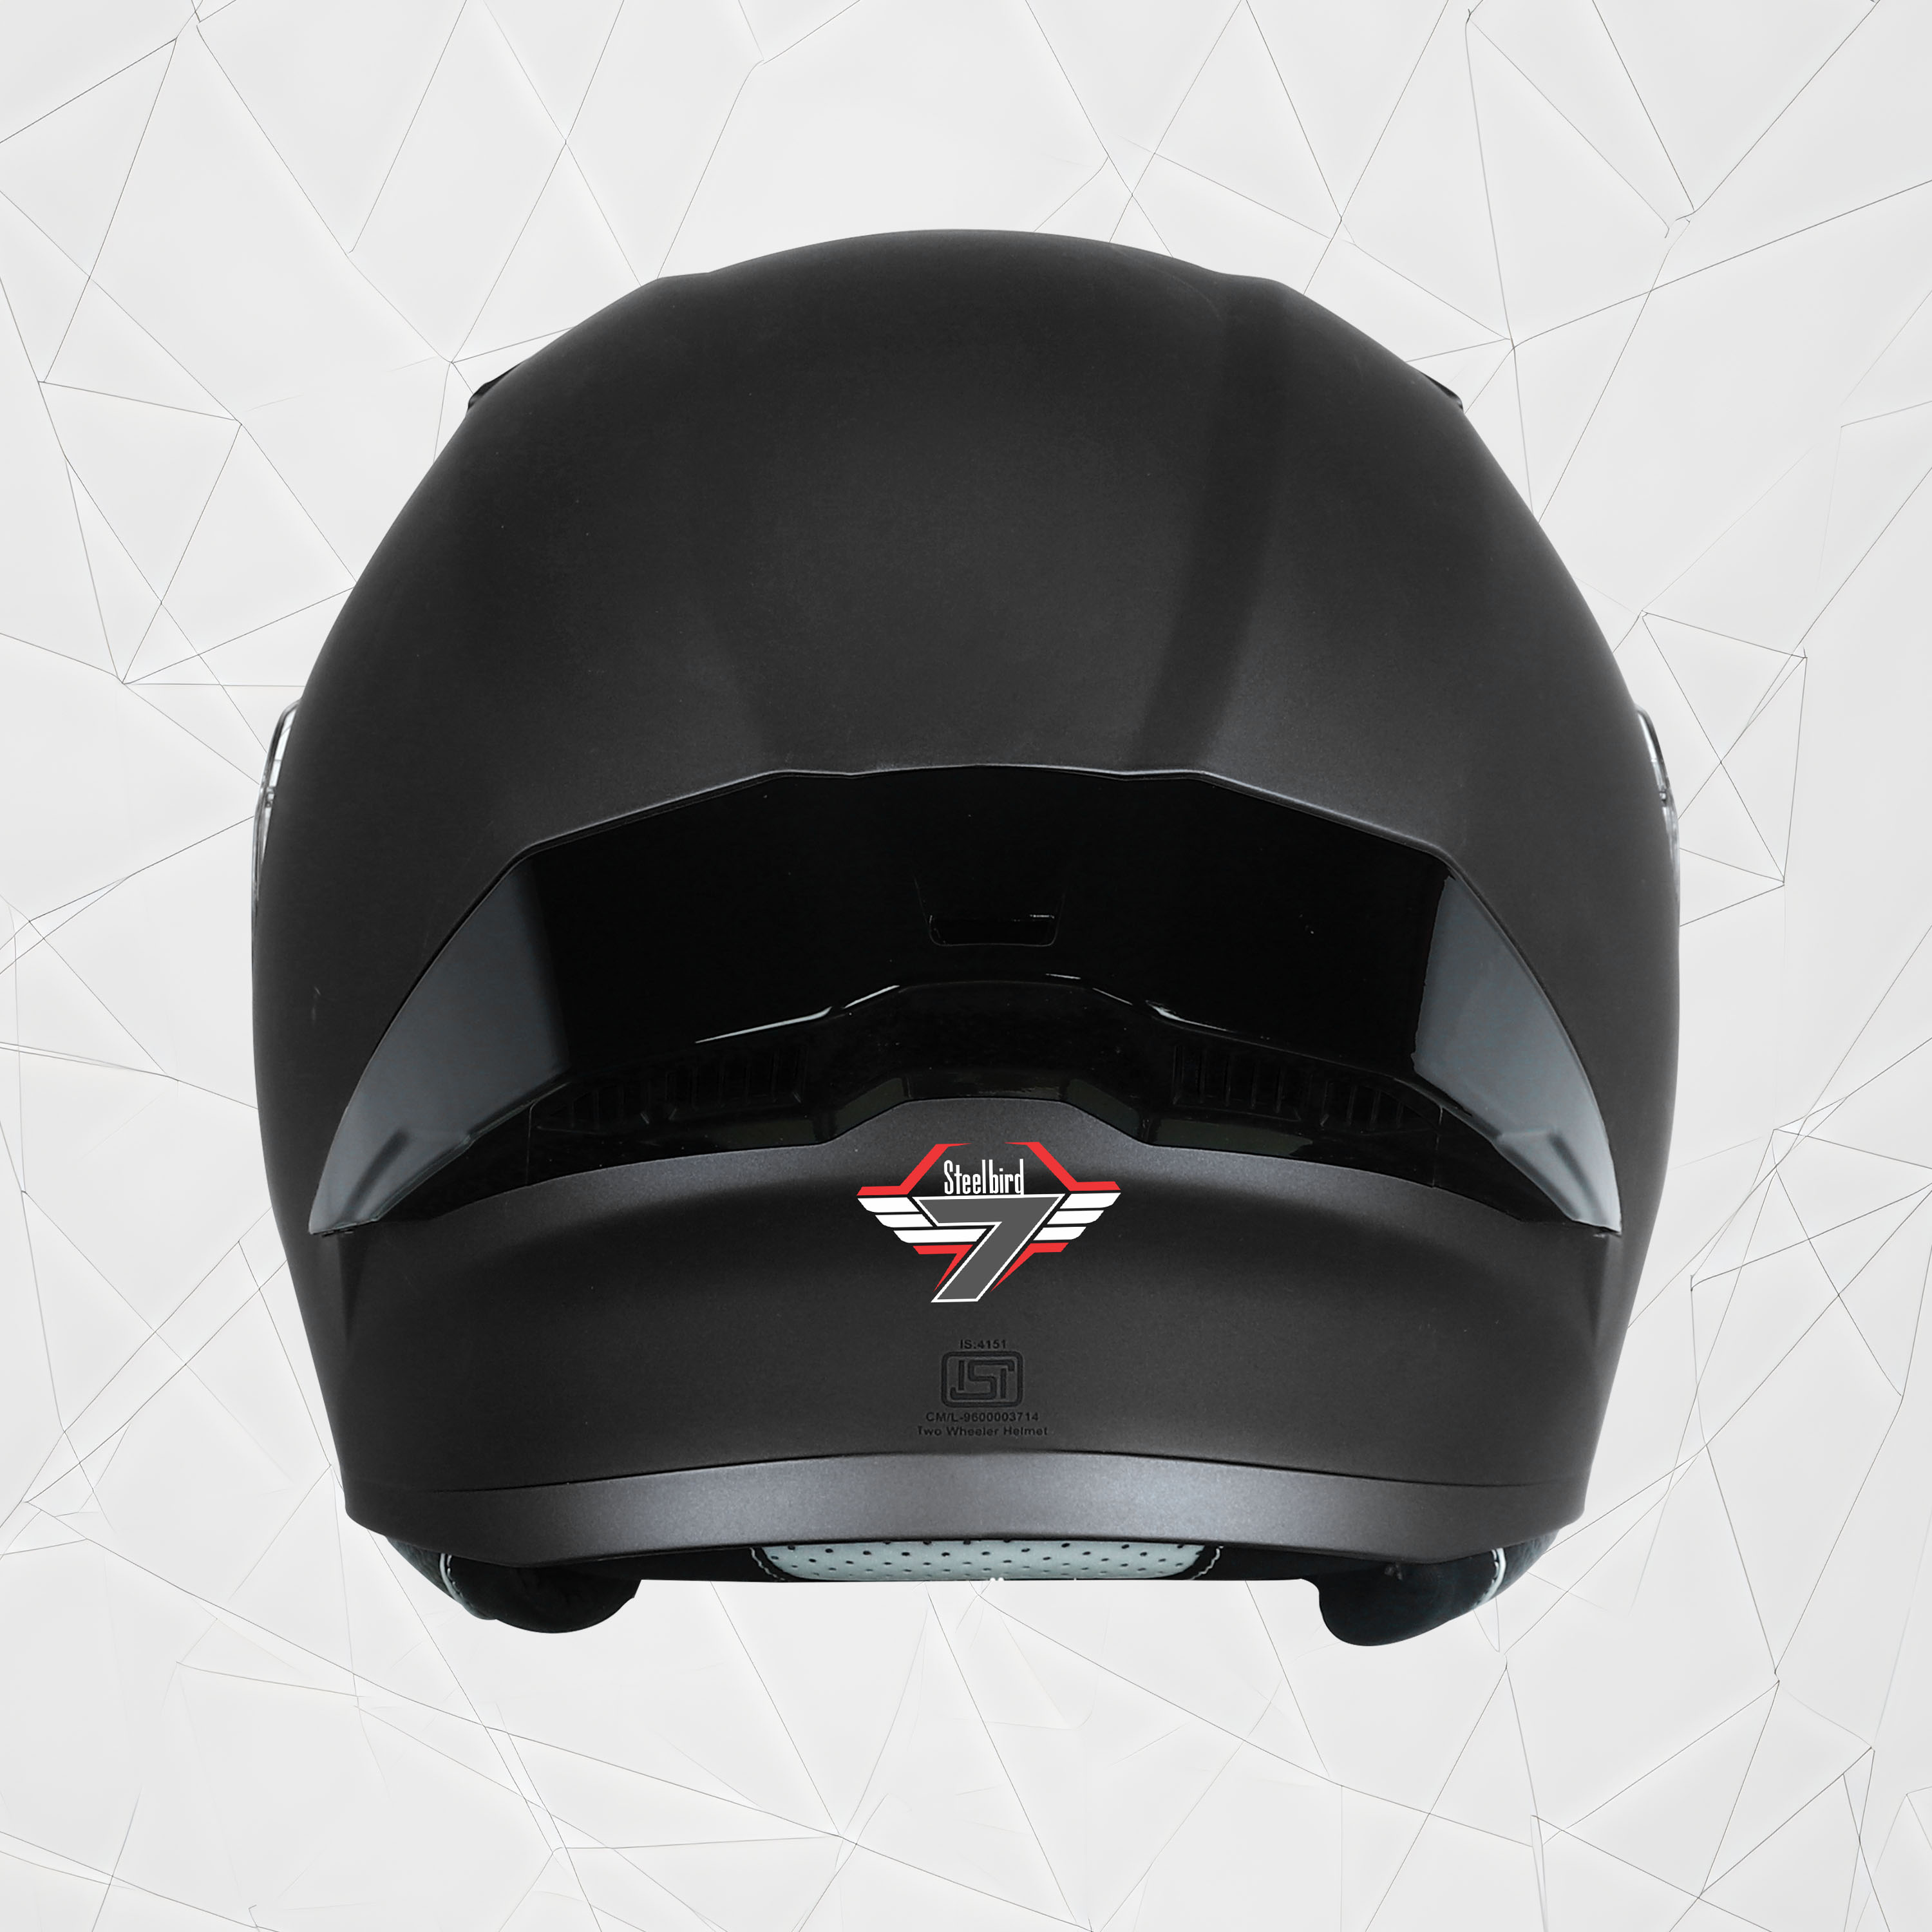 Steelbird SBA-20 7Wings ISI Certified Flip-Up Helmet With Black Spoiler For Men And Women With Inner Smoke Sun Shield (Glossy Black)